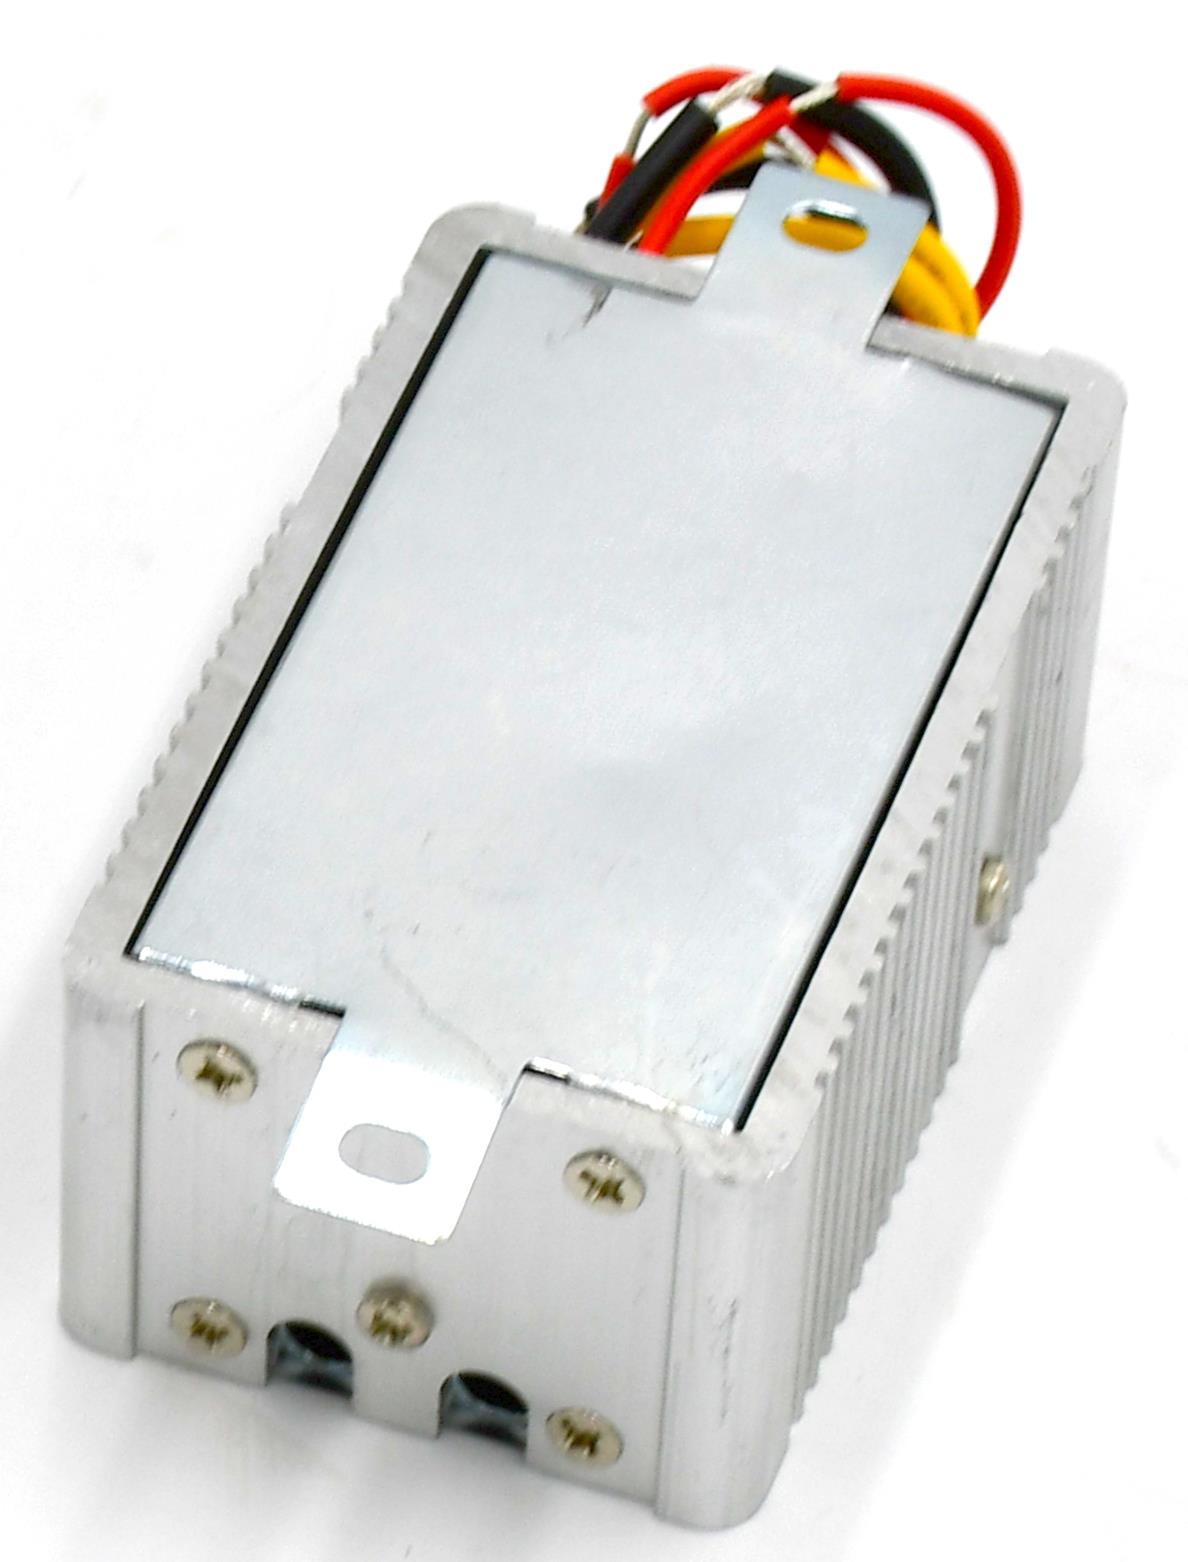 ALL-5102 | ALL-5102  Voltage Converter 24 Volt to 12 Volt 30 Amp Update  (7).JPG